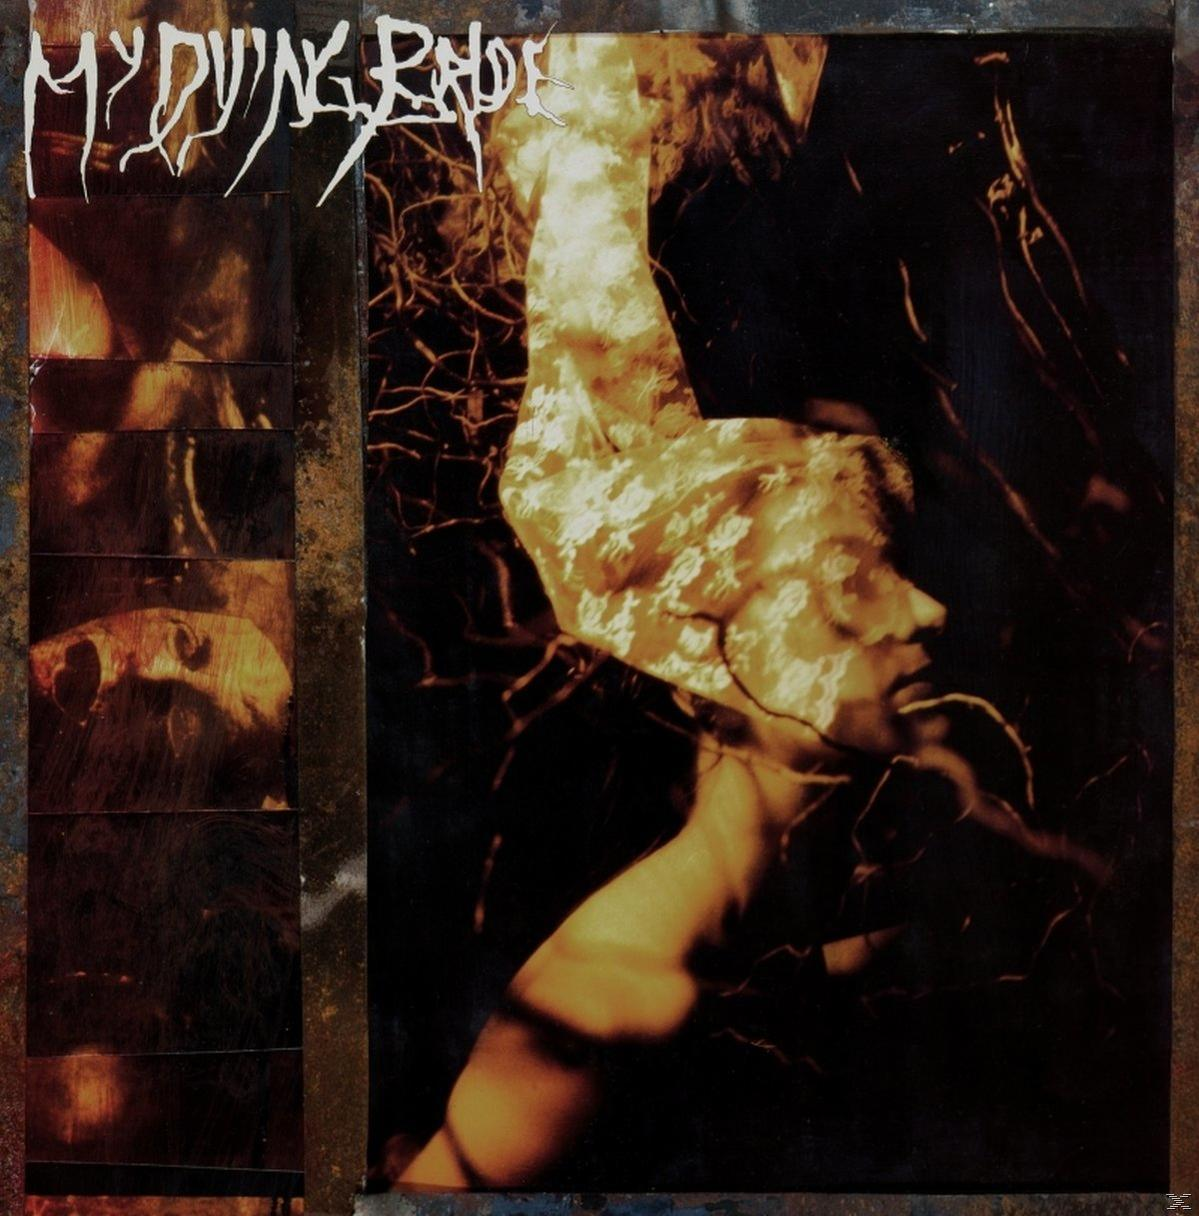 Symphonaire Empyrium Bride (Vinyl) My - - Dying Et Spera Infernus